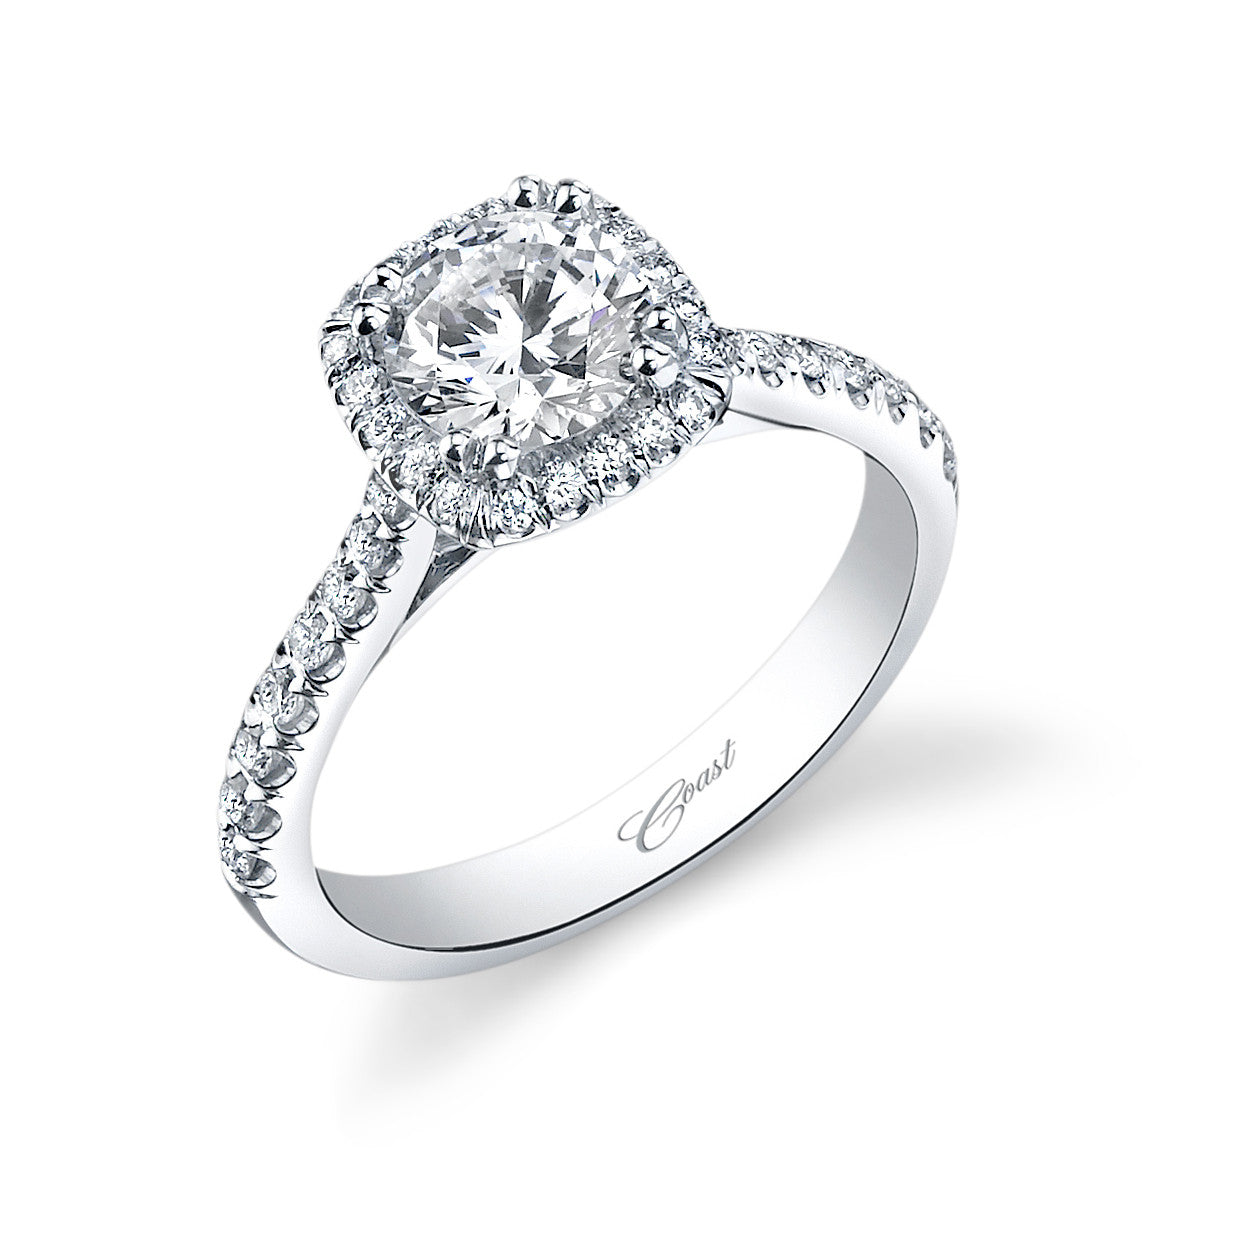 Round diamond halo engagement ring Lady & Diamond Ring Guard Enhance